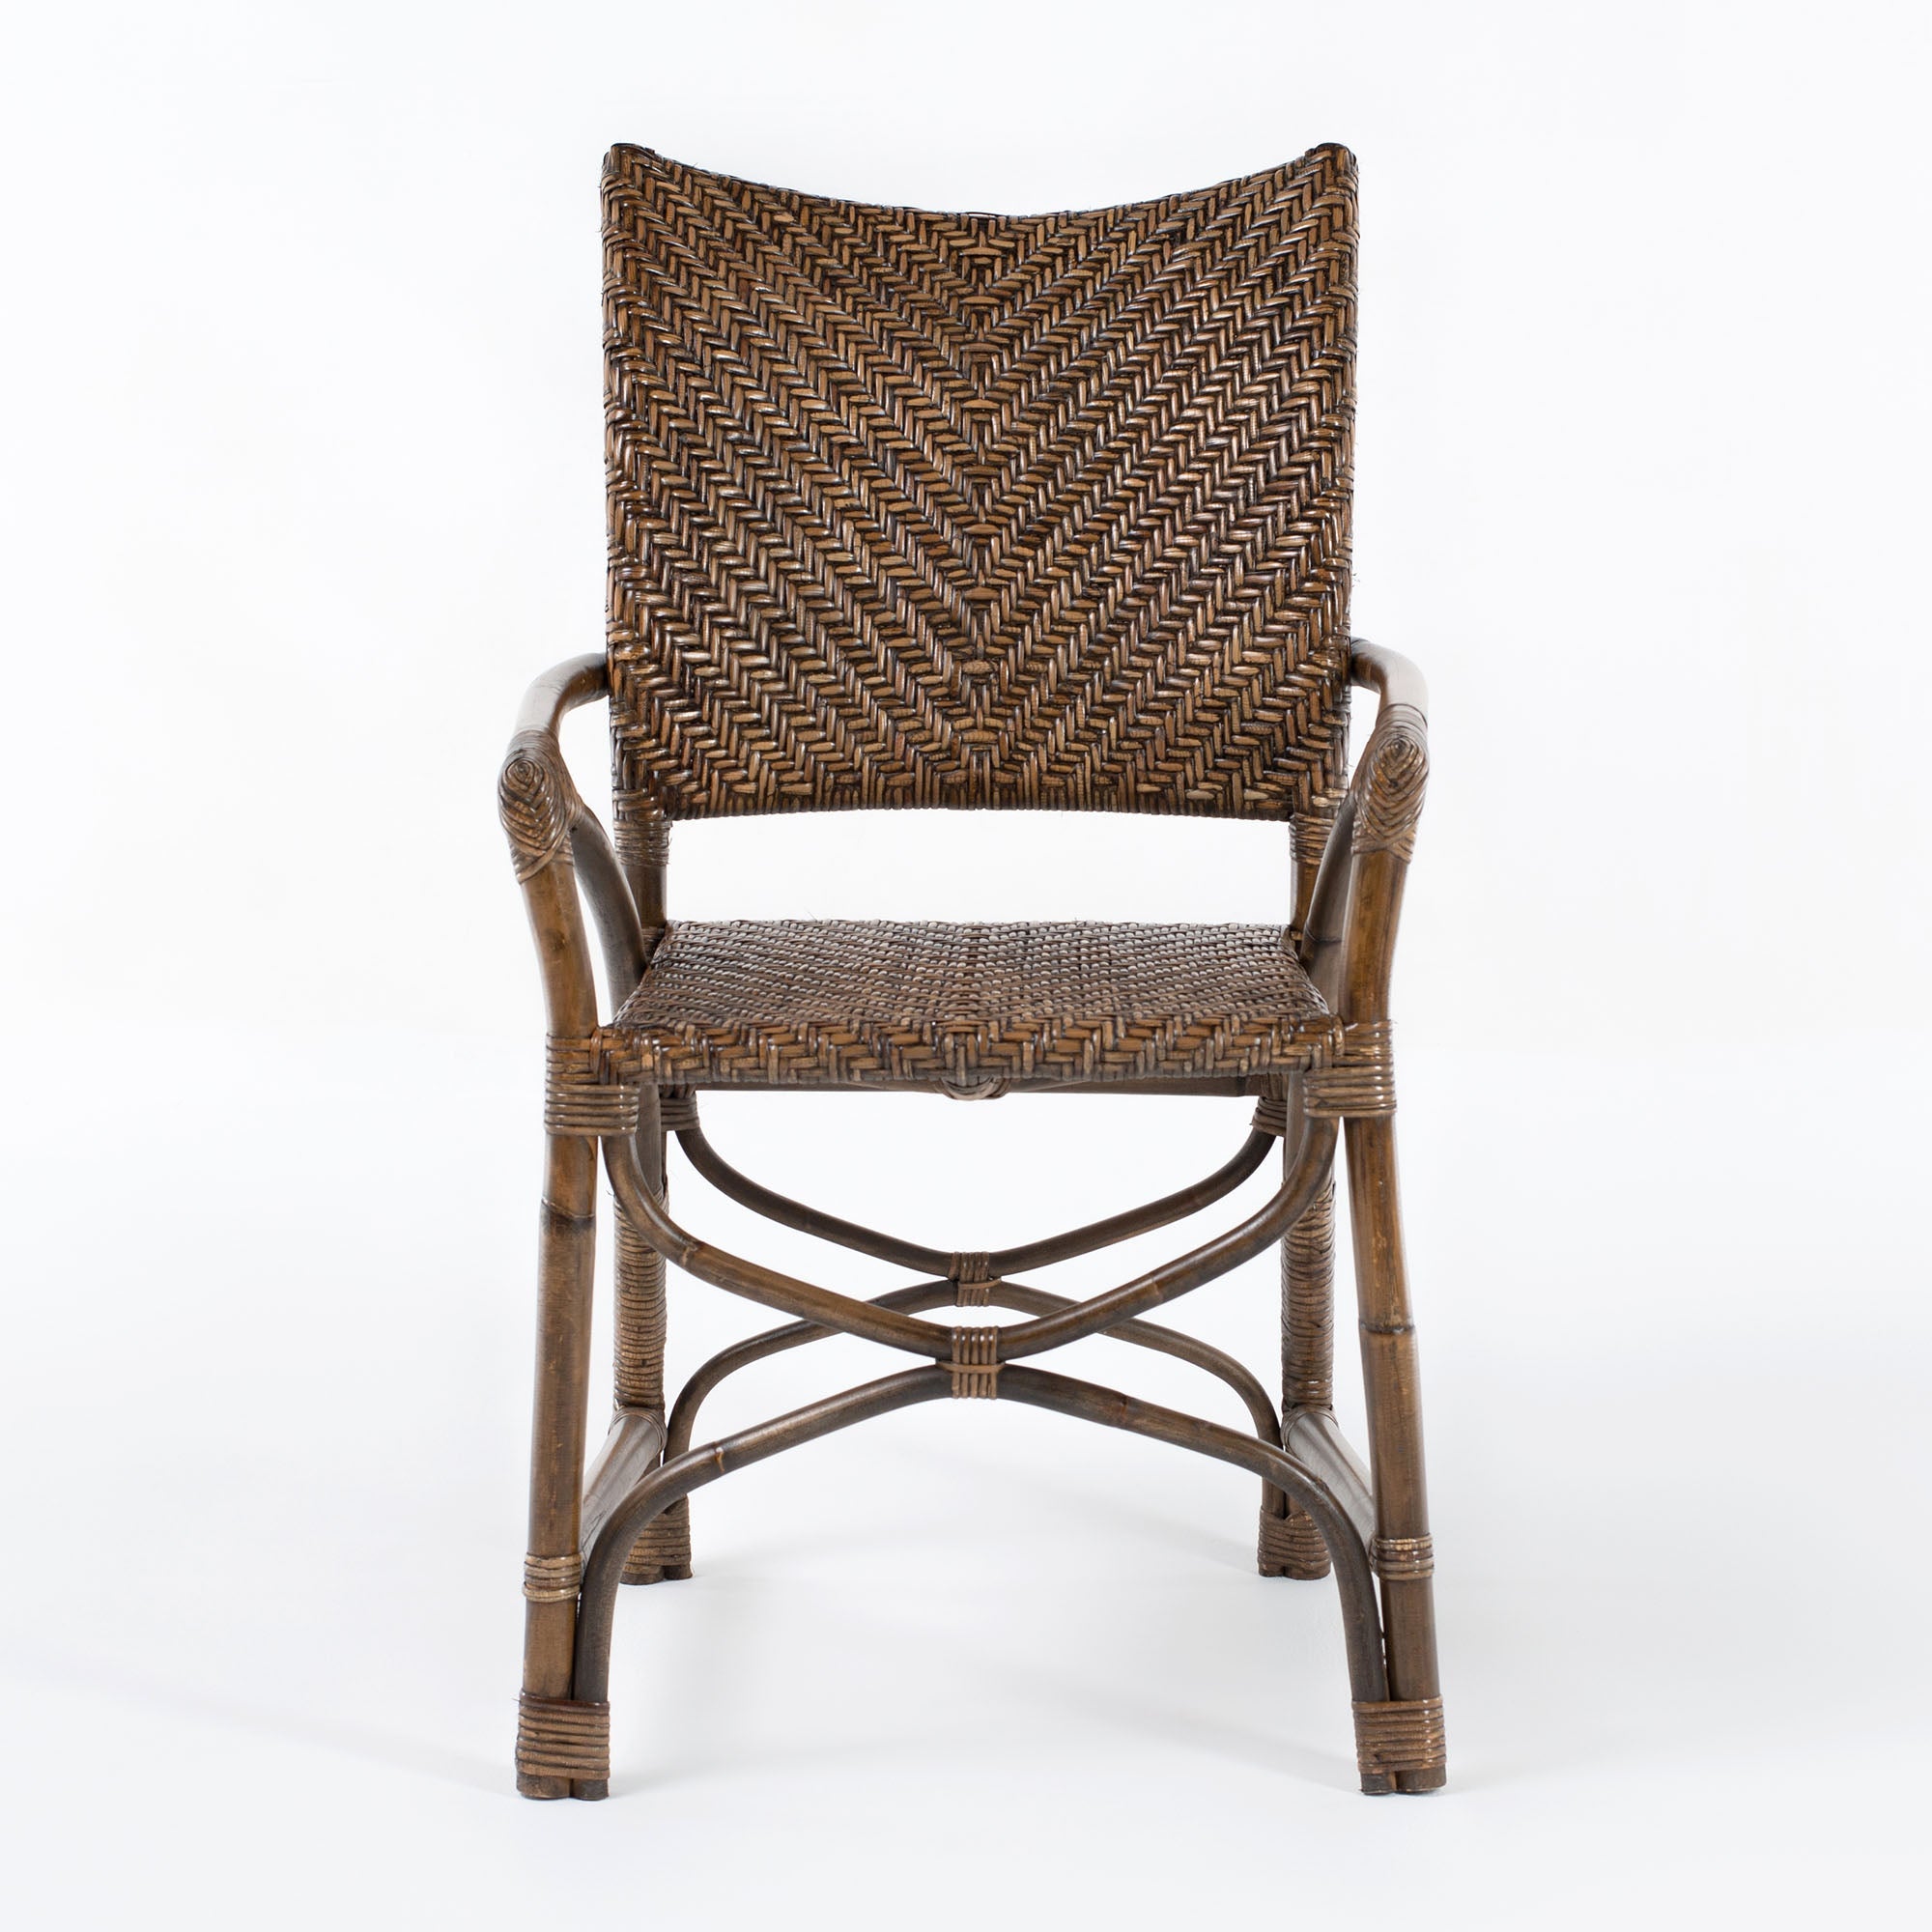 Wickerworks Rustic Handwoven Rattan Countess Chair (Set of 2)